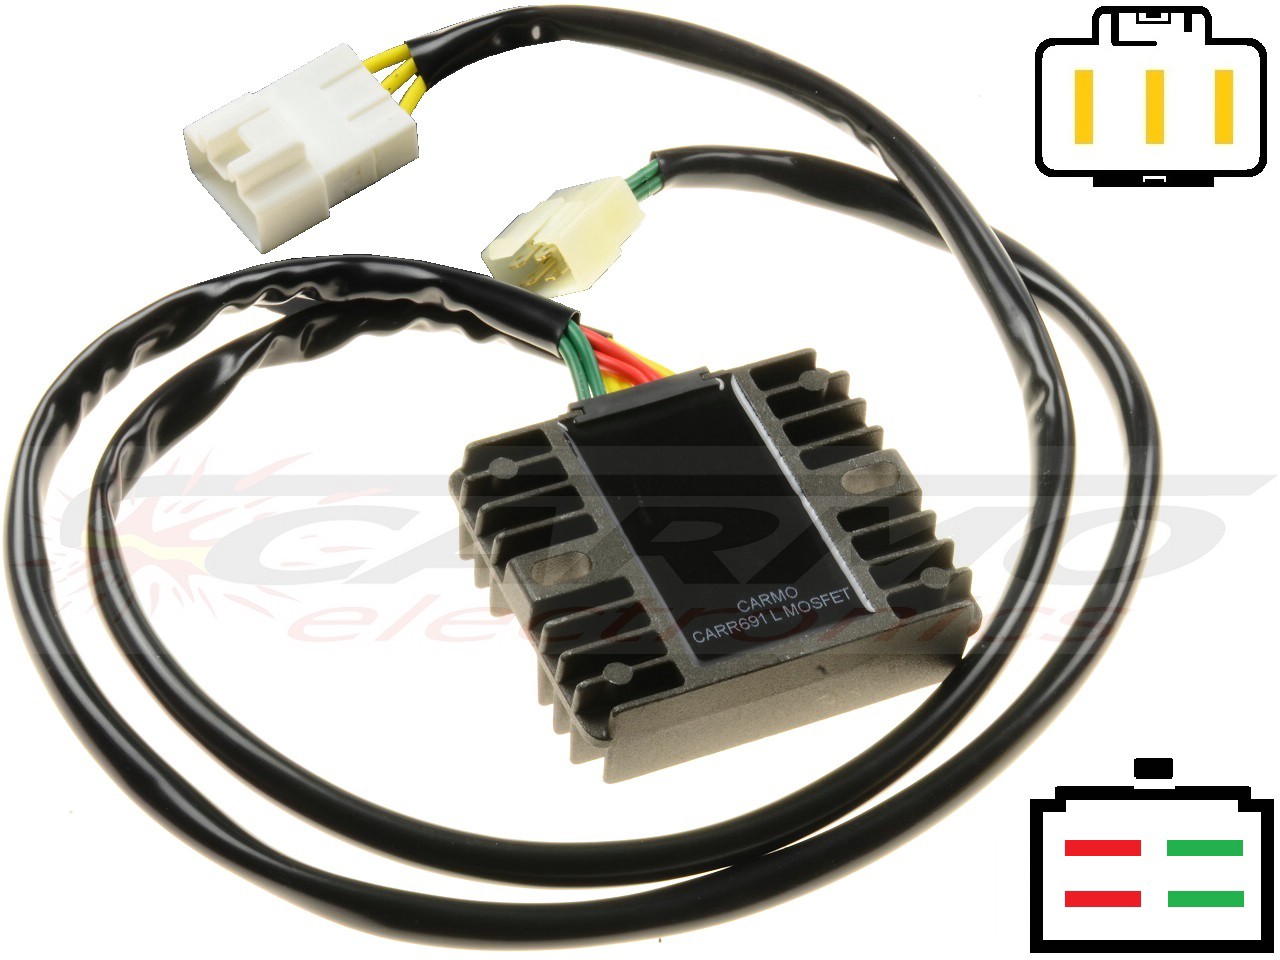 CARR694VTX 75cm Honda VTX1300 MOSFET Voltage regulator rectifier - Click Image to Close